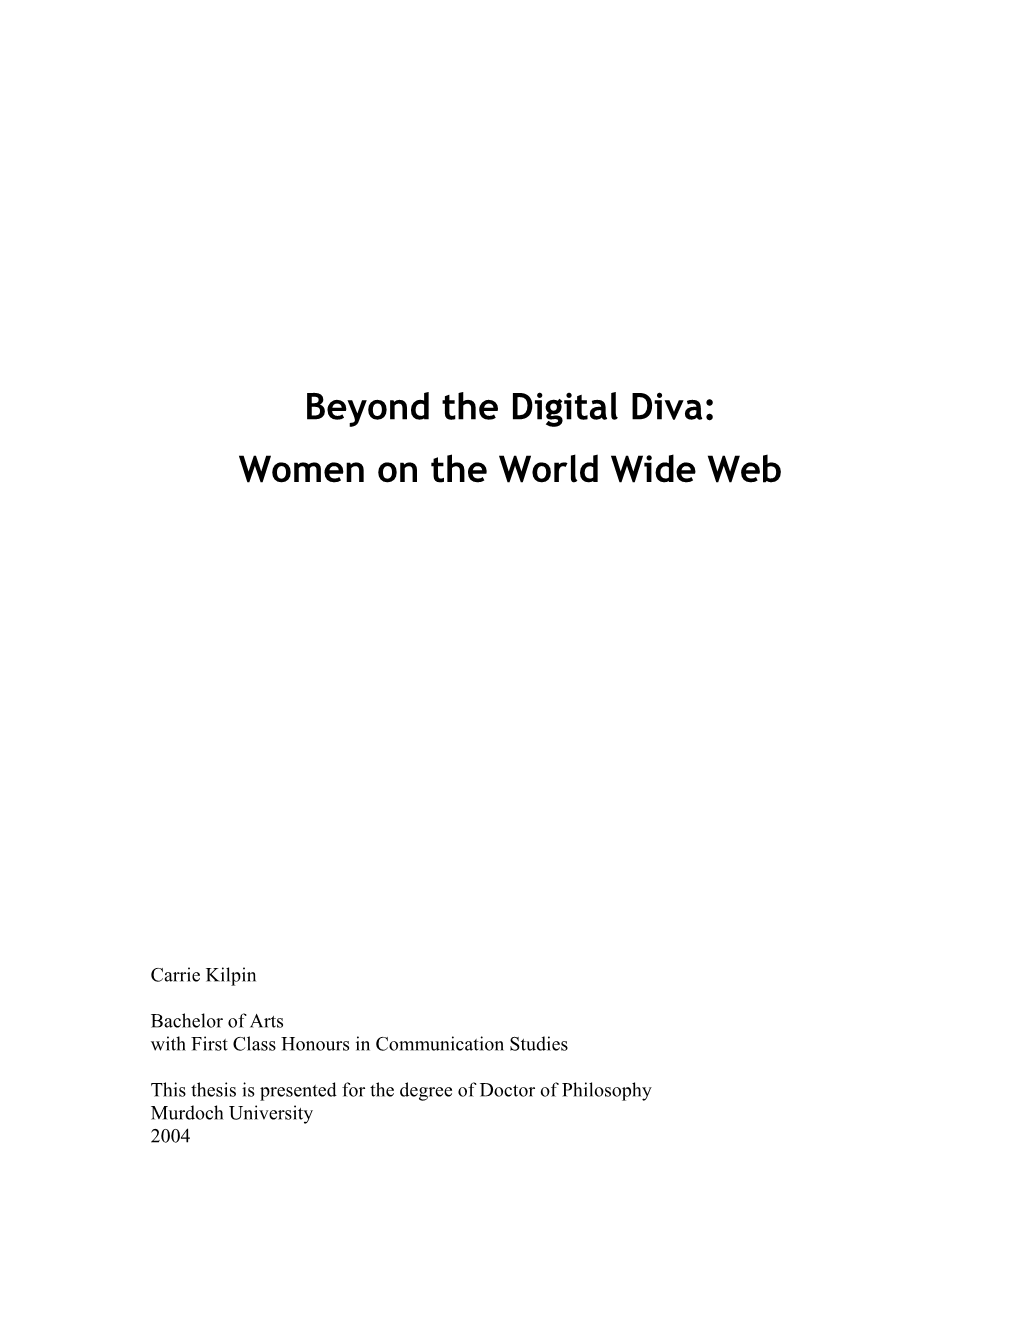 Beyond the Digital Diva: Women on the World Wide Web